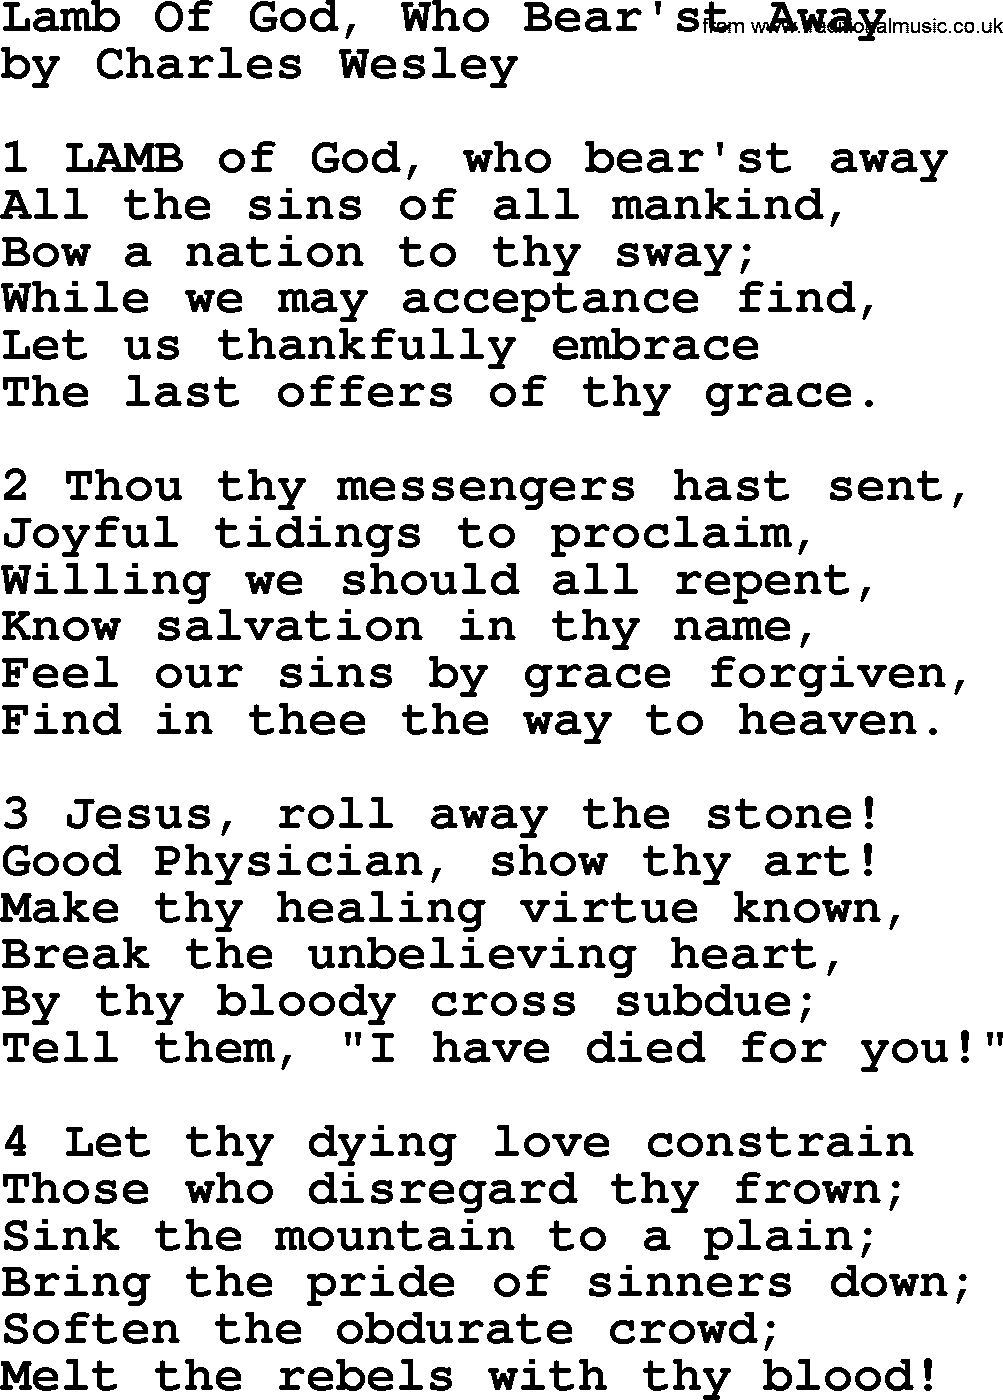 Charles Wesley hymn: Lamb Of God, Who Bear'st Away, lyrics